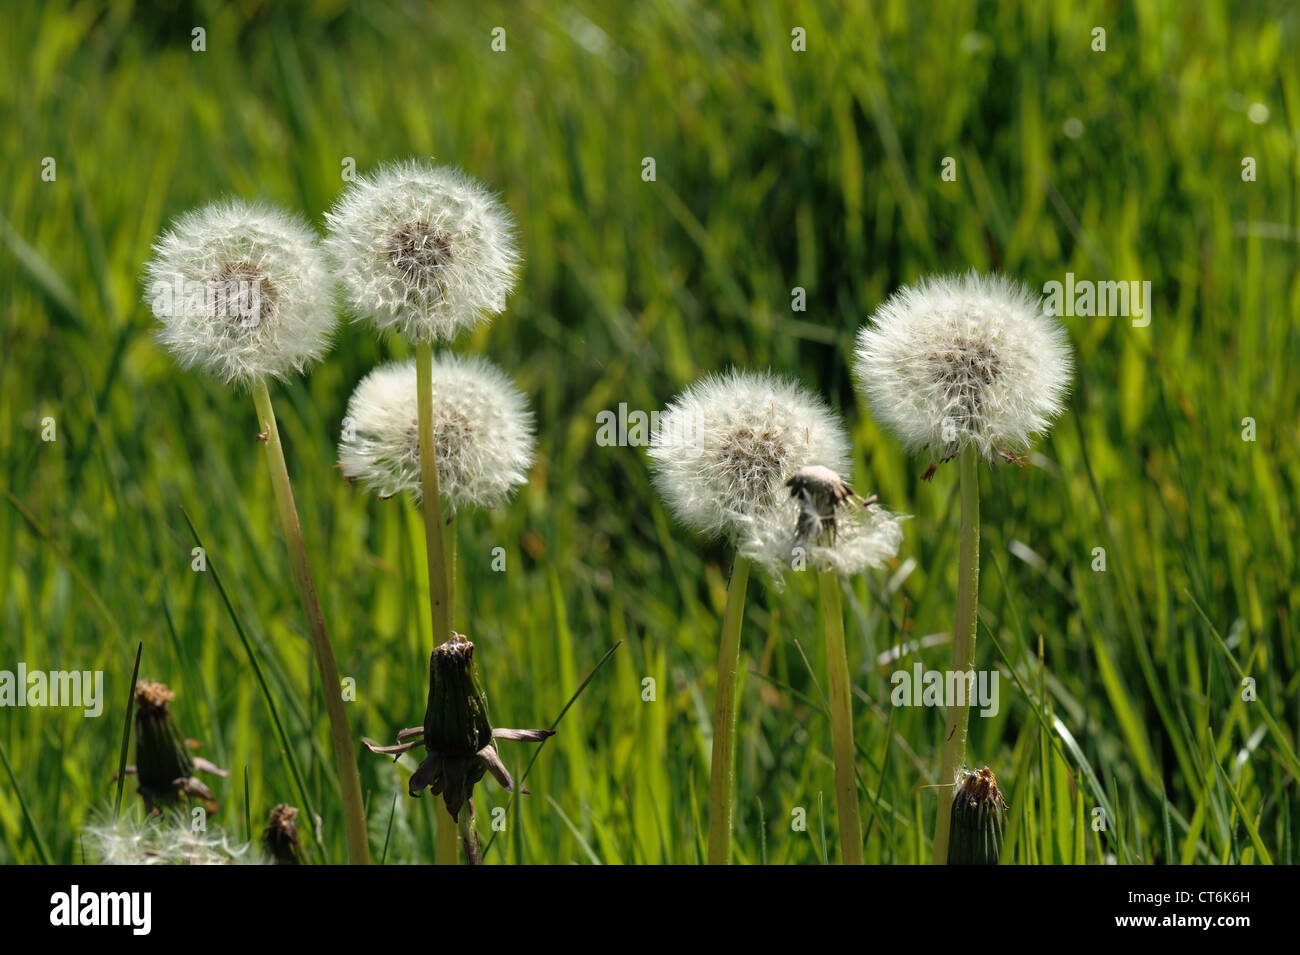 Dandelion (Taraxacum officinale) seedhead with grassland behind Stock Photo